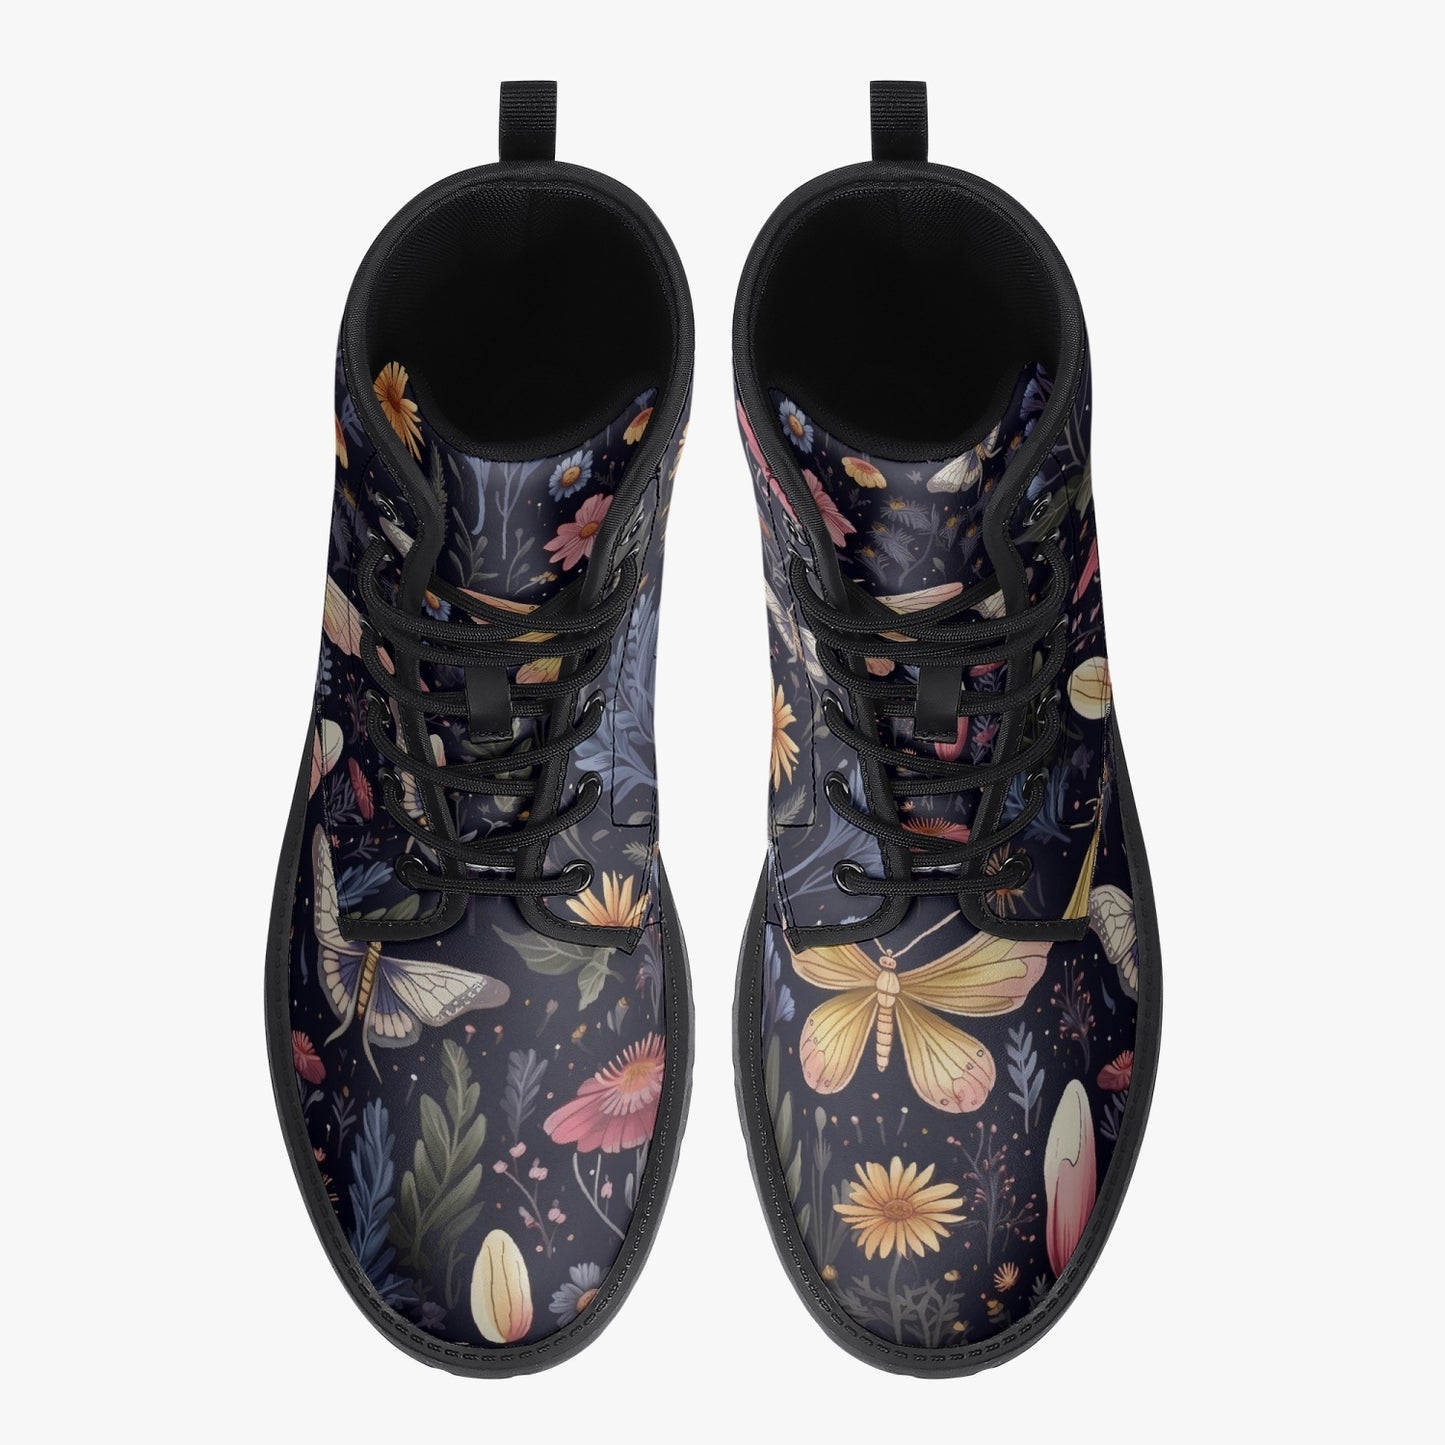 CottageCore Vegan Leather Boots - Floral ForestCore Boots (JPCC1)